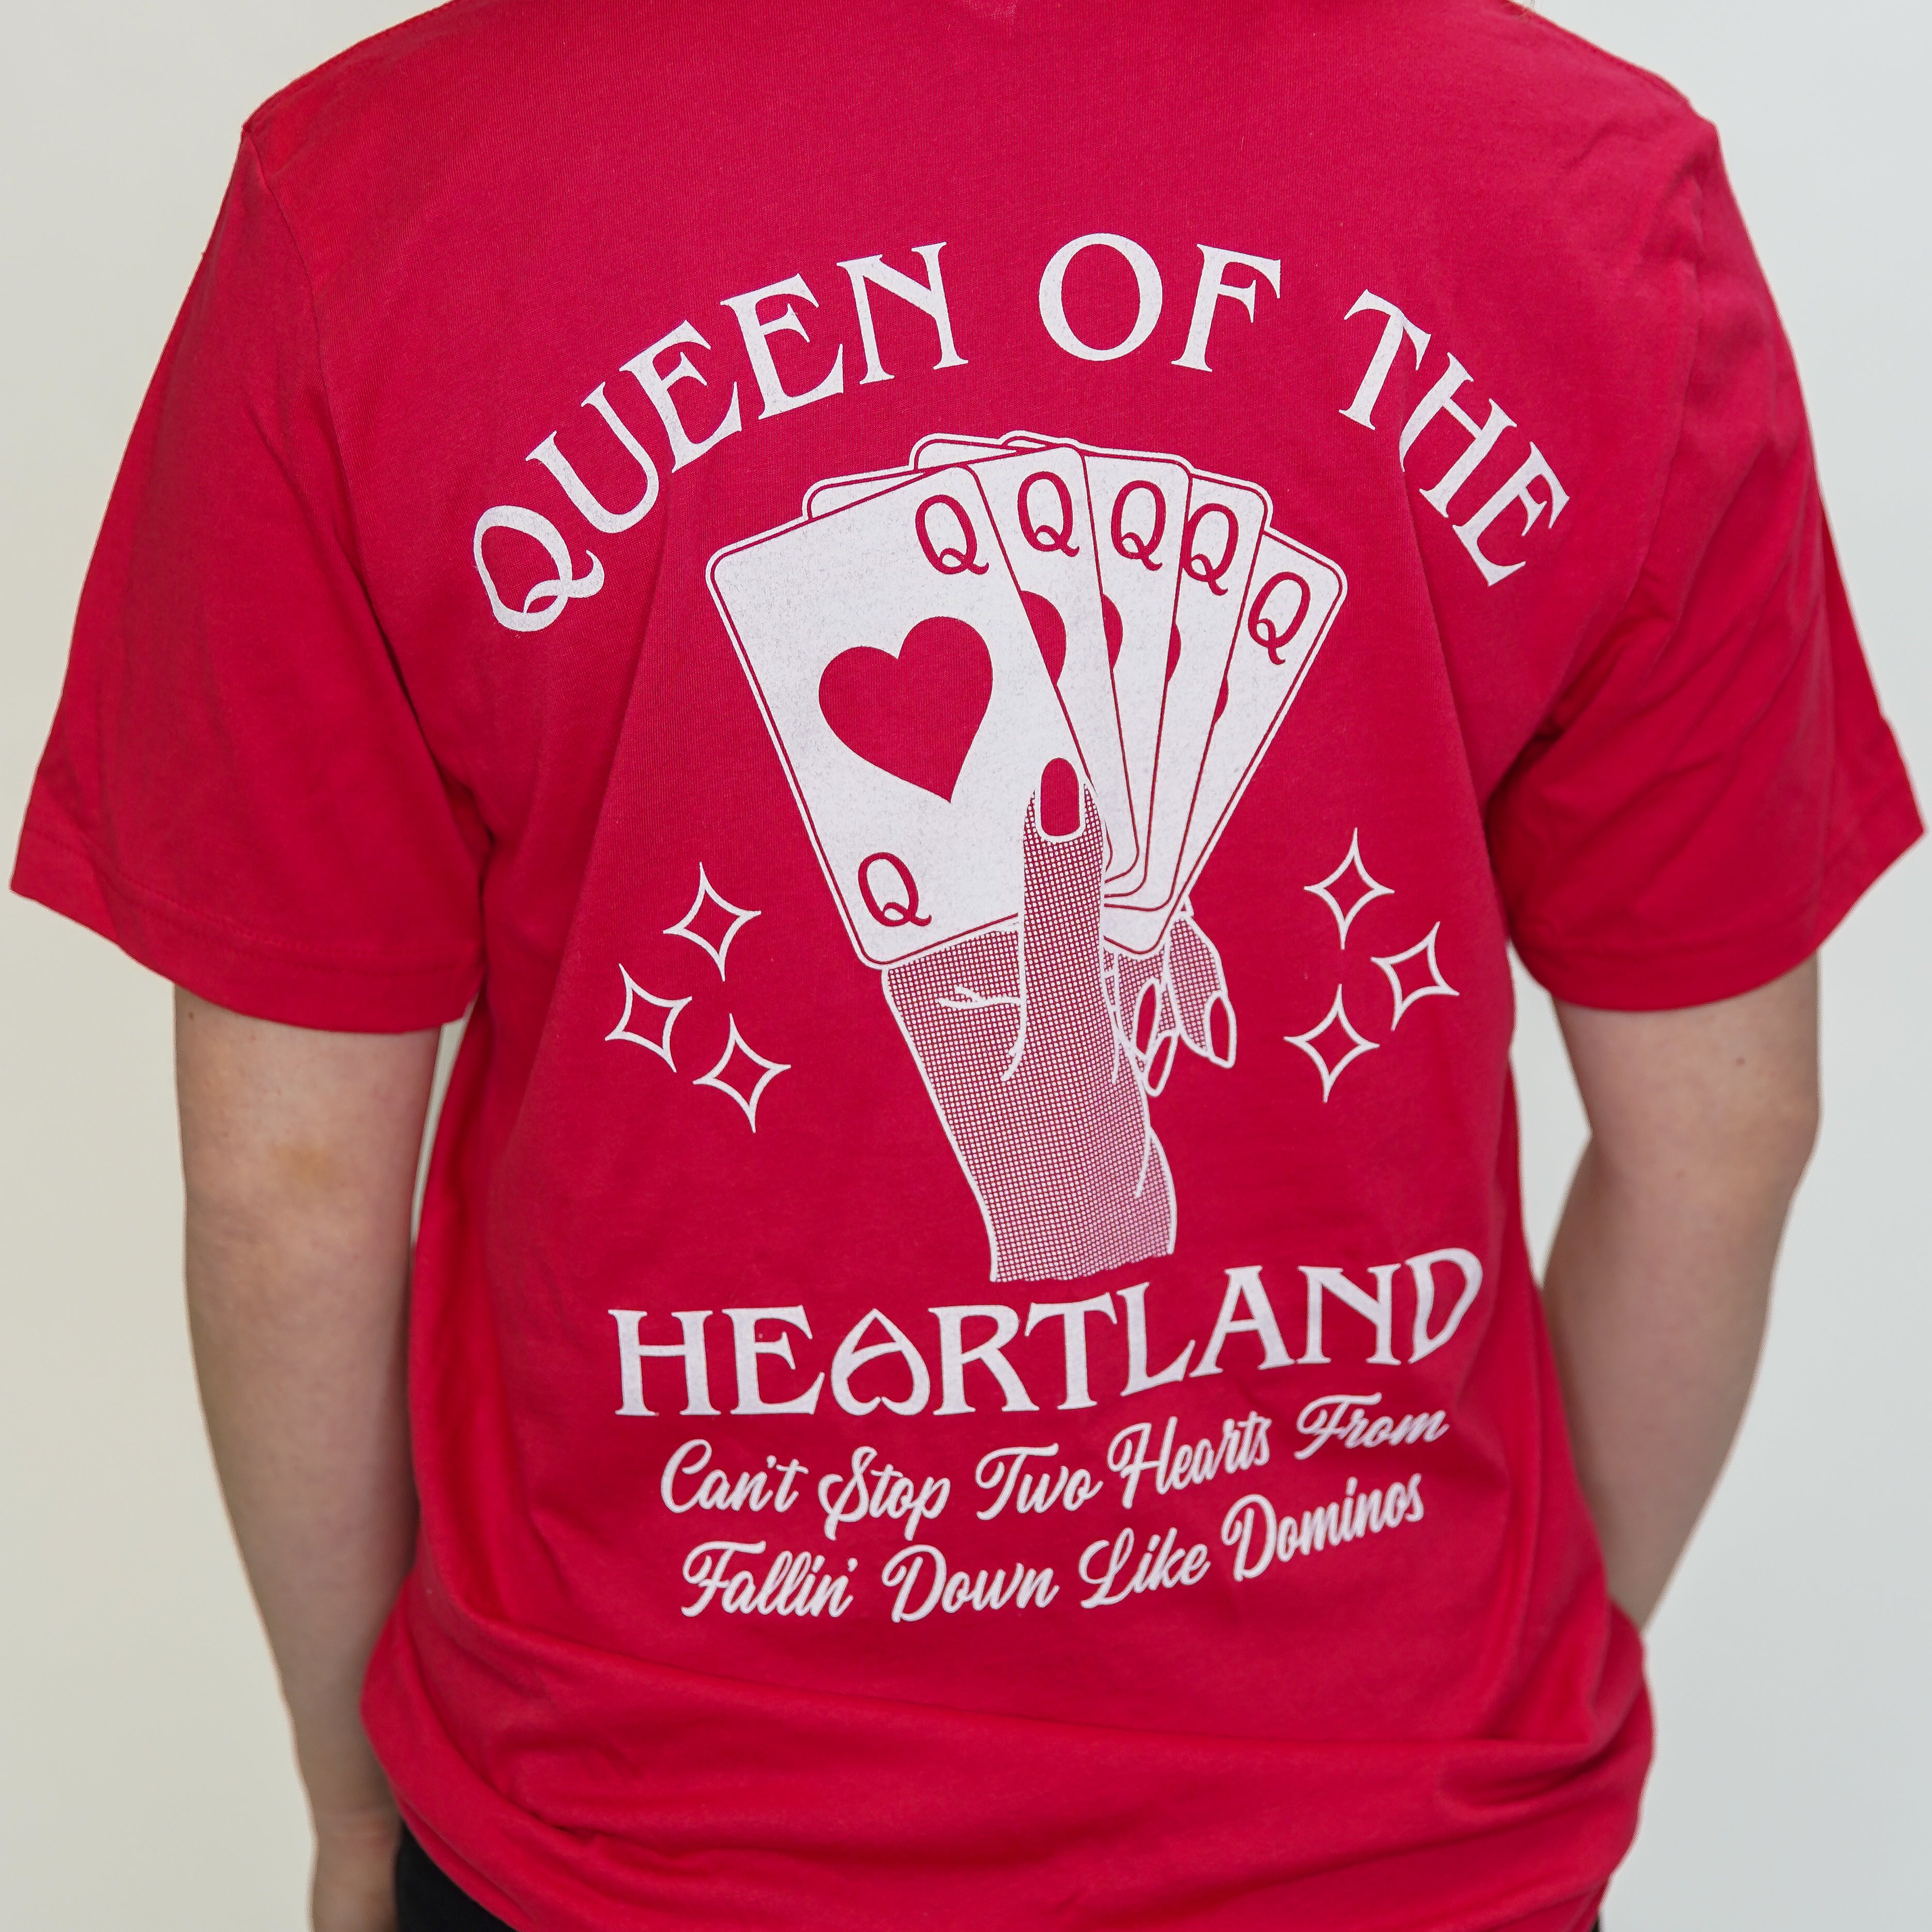 Queen of the Heartland Tee